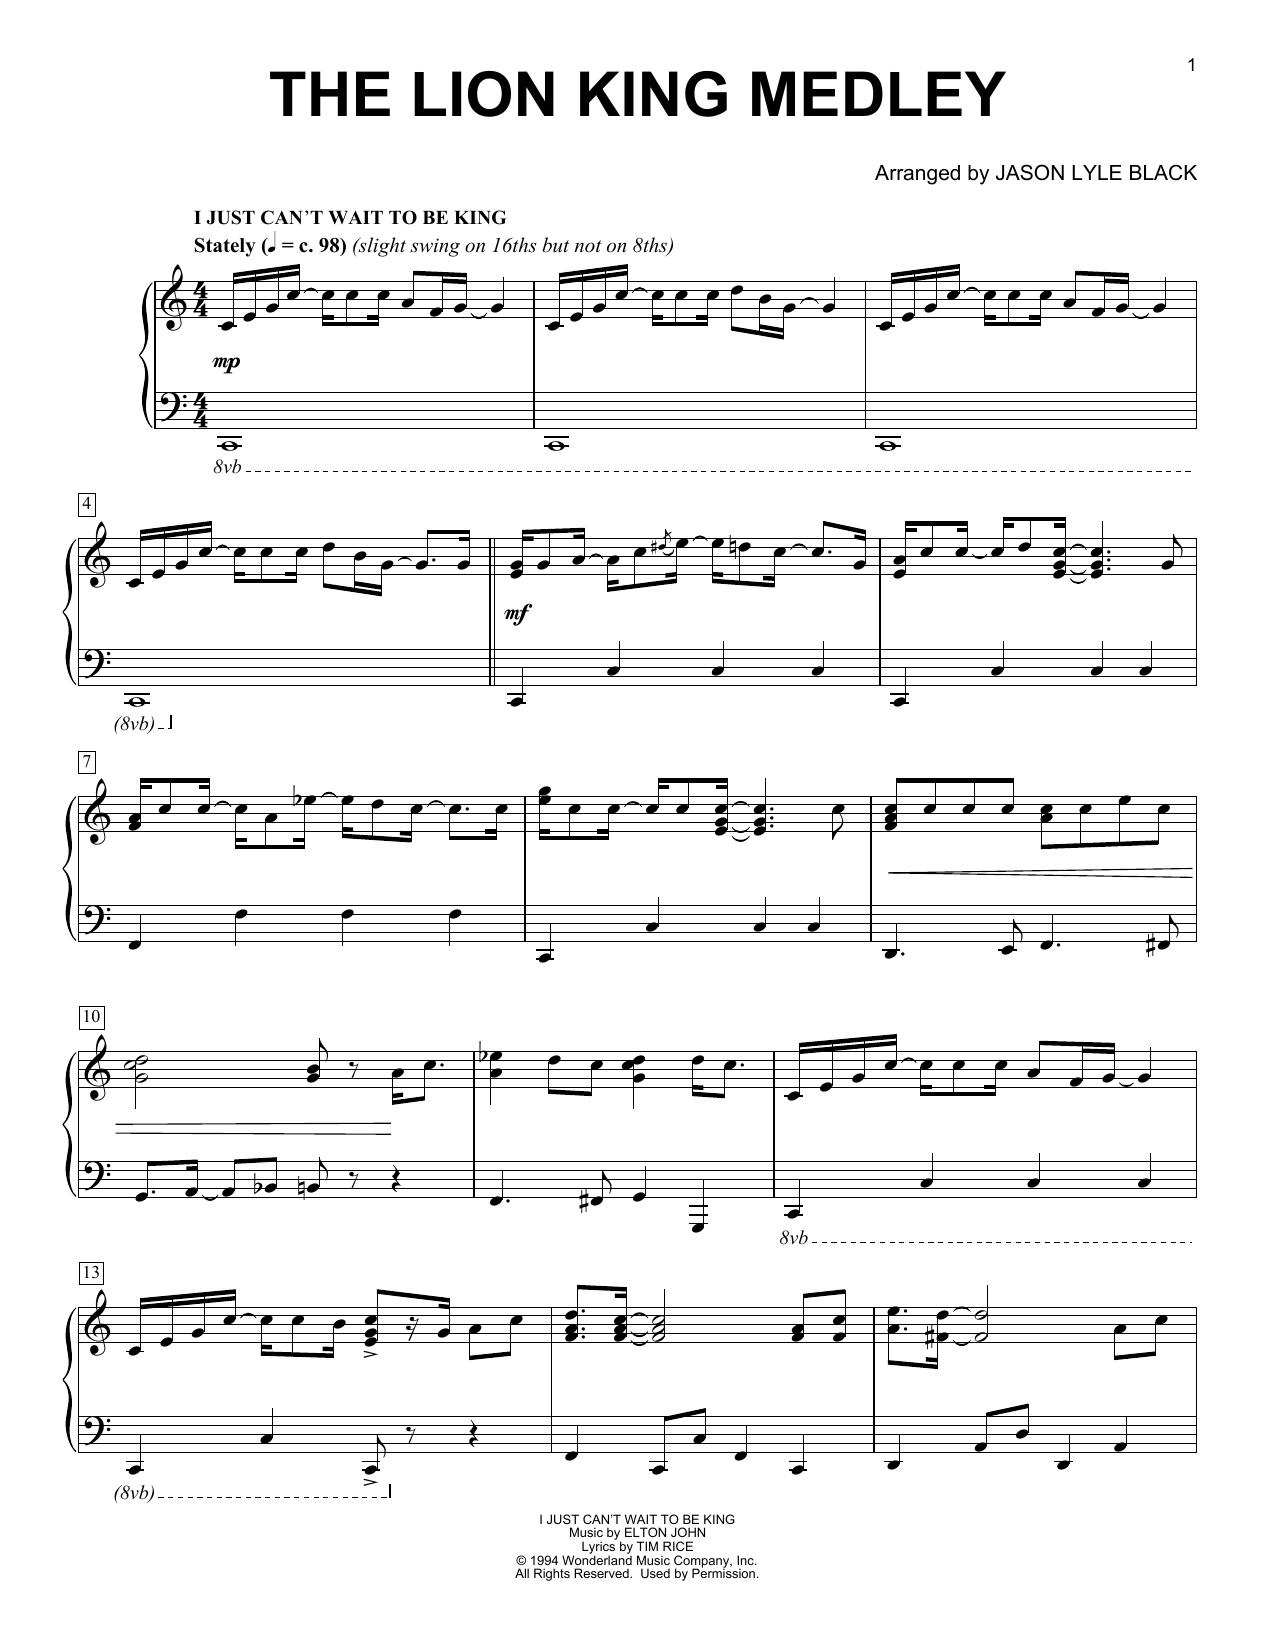 Elton John & Tim Rice Lion King Medley (arr. Jason Lyle Black) Sheet Music Notes & Chords for Piano - Download or Print PDF